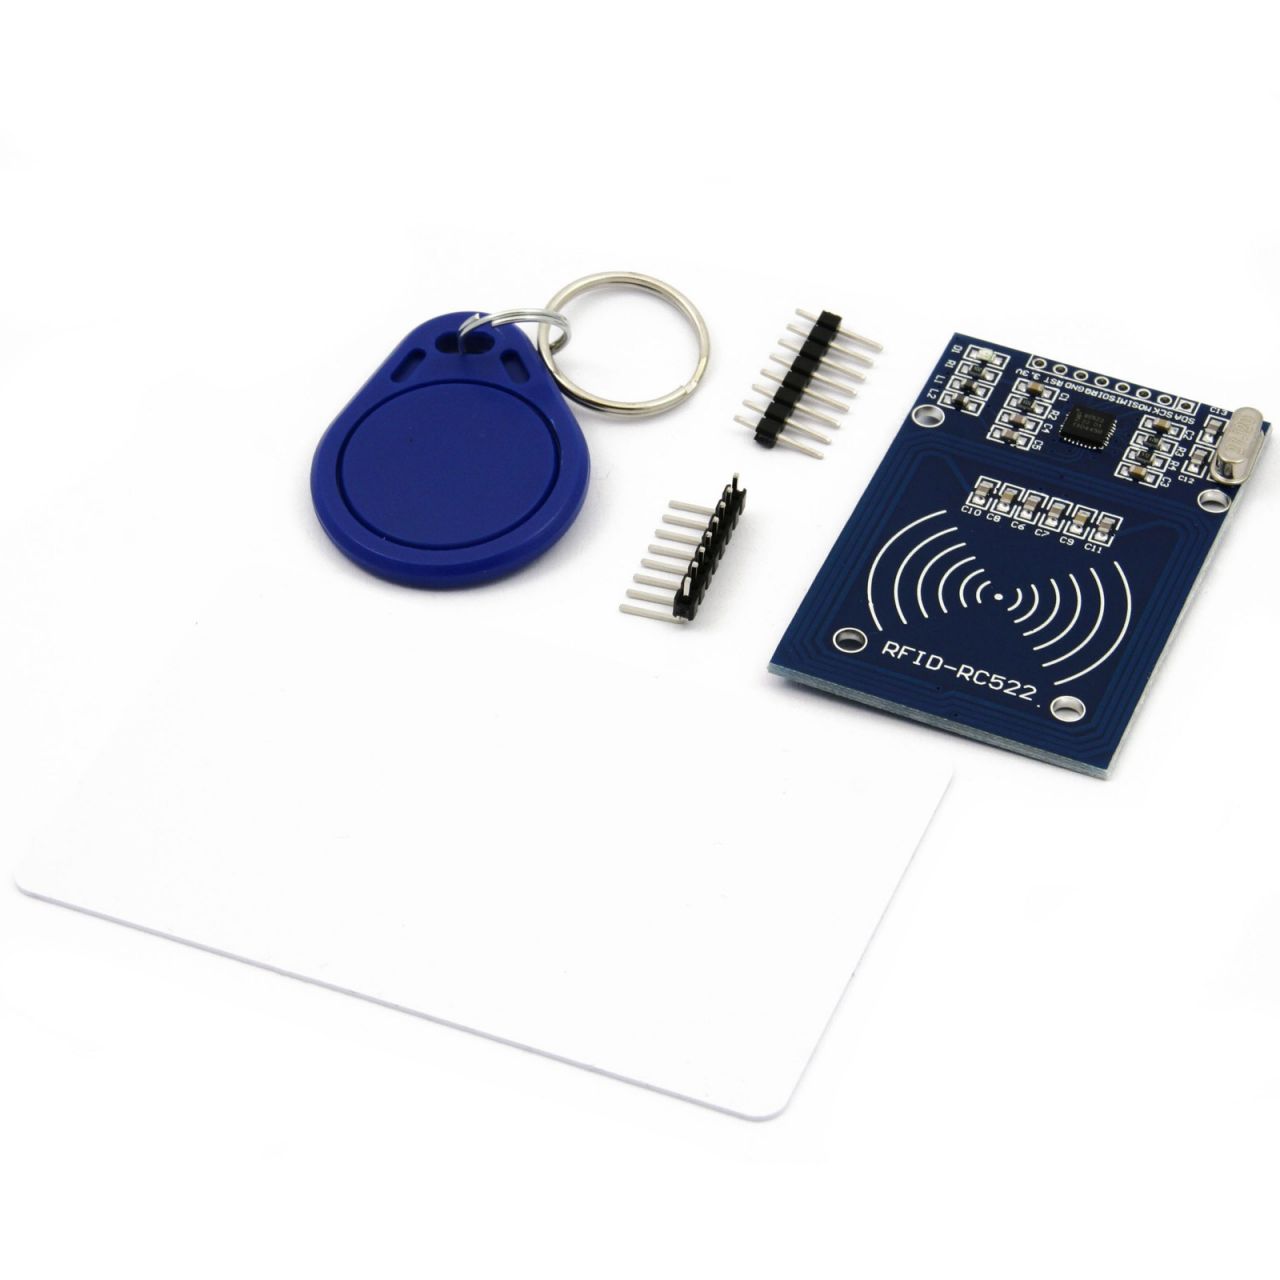 RFID Set MFRC522 - Kartenleser + Mifare Transponder-Karte unter RoboMall